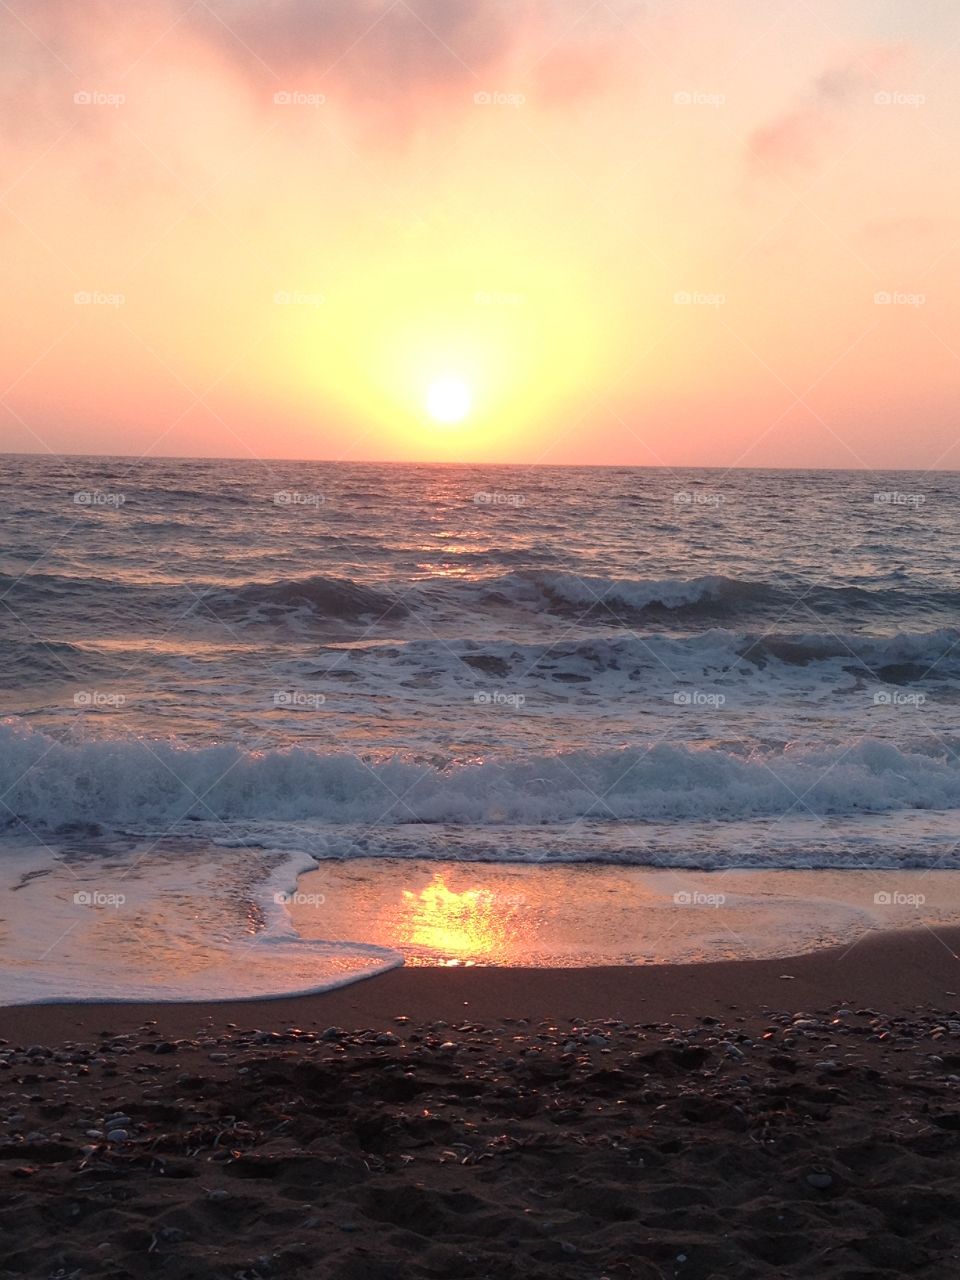 A beautiful sunset over a beach in Rhodes, Greece